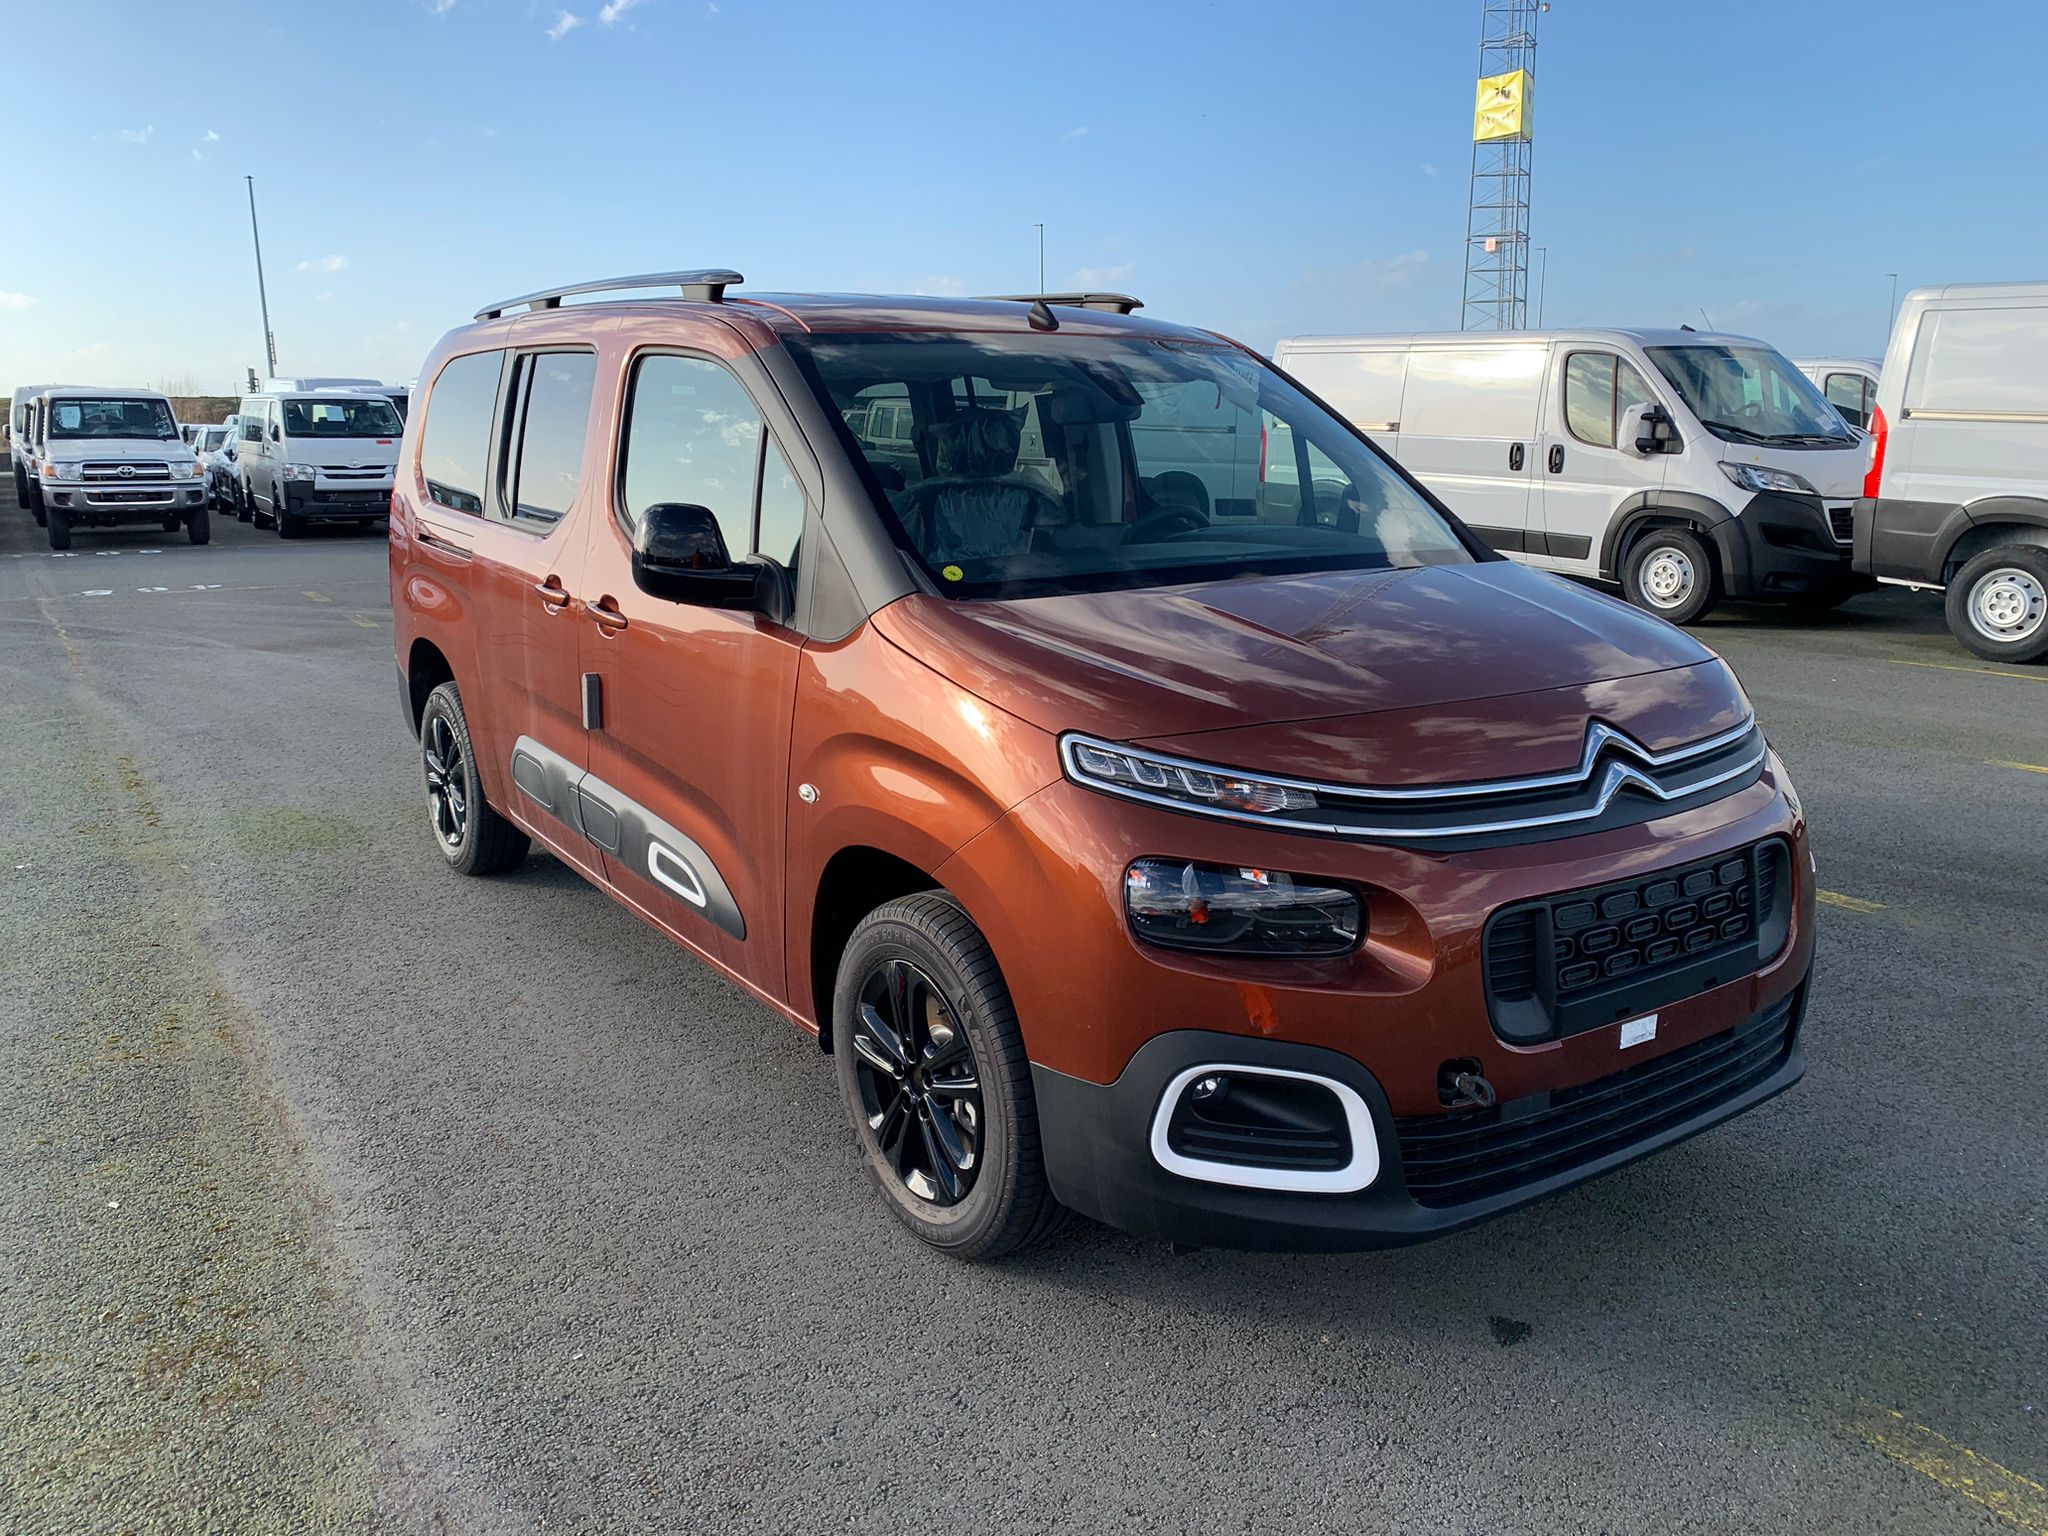 New Citroën Berlingo Offers